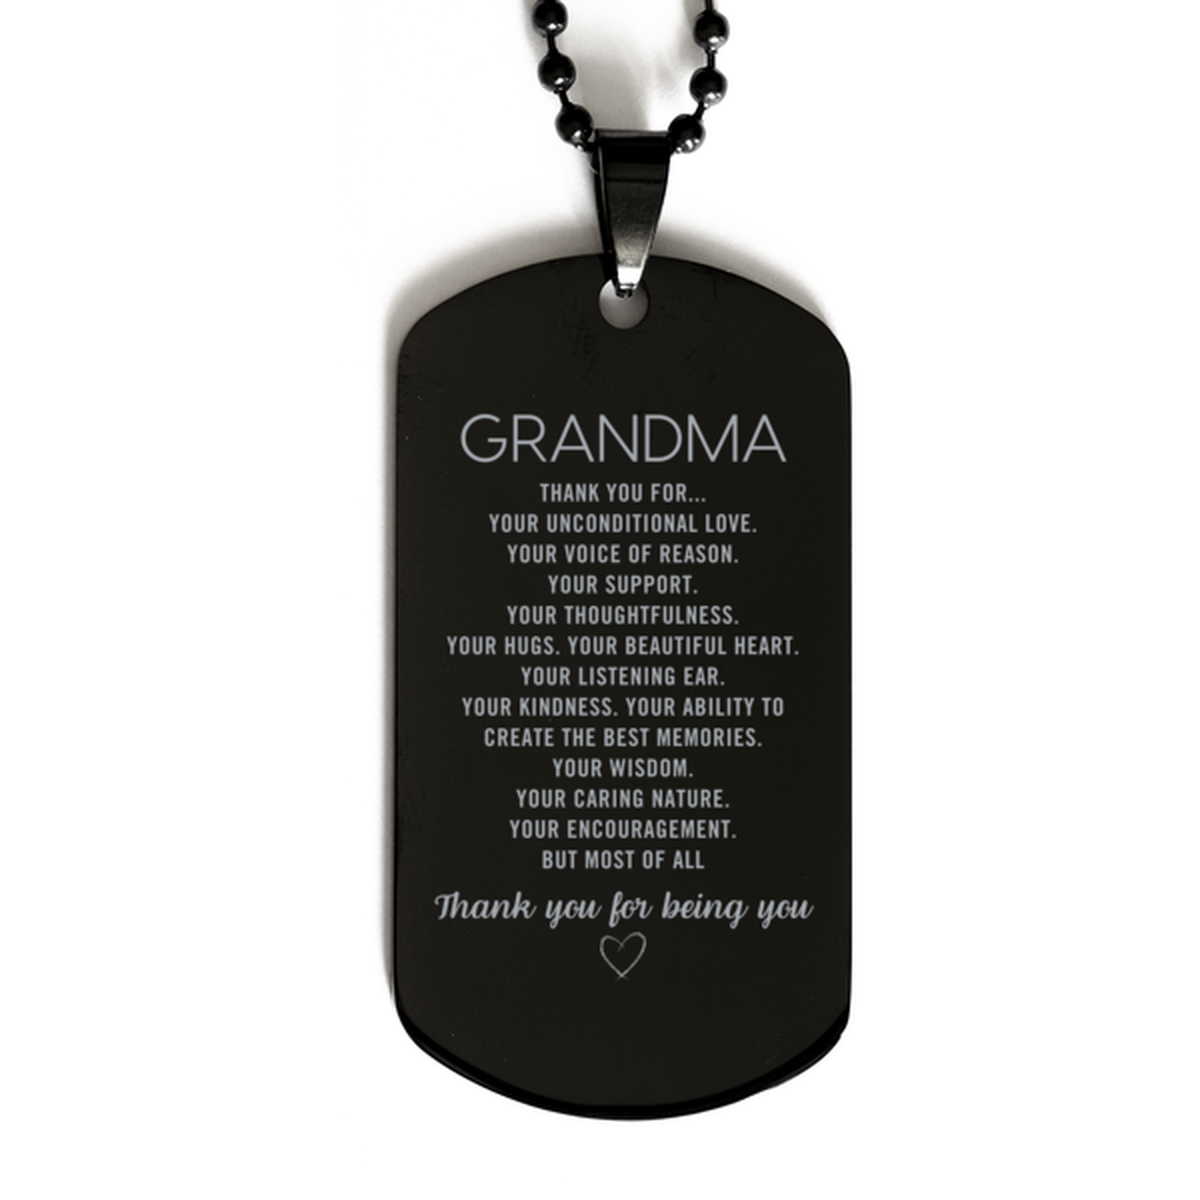 Grandma Black Dog Tag Custom, Engraved Gifts For Grandma Christmas Graduation Birthday Gifts for Men Women Grandma Thank you for Your unconditional love